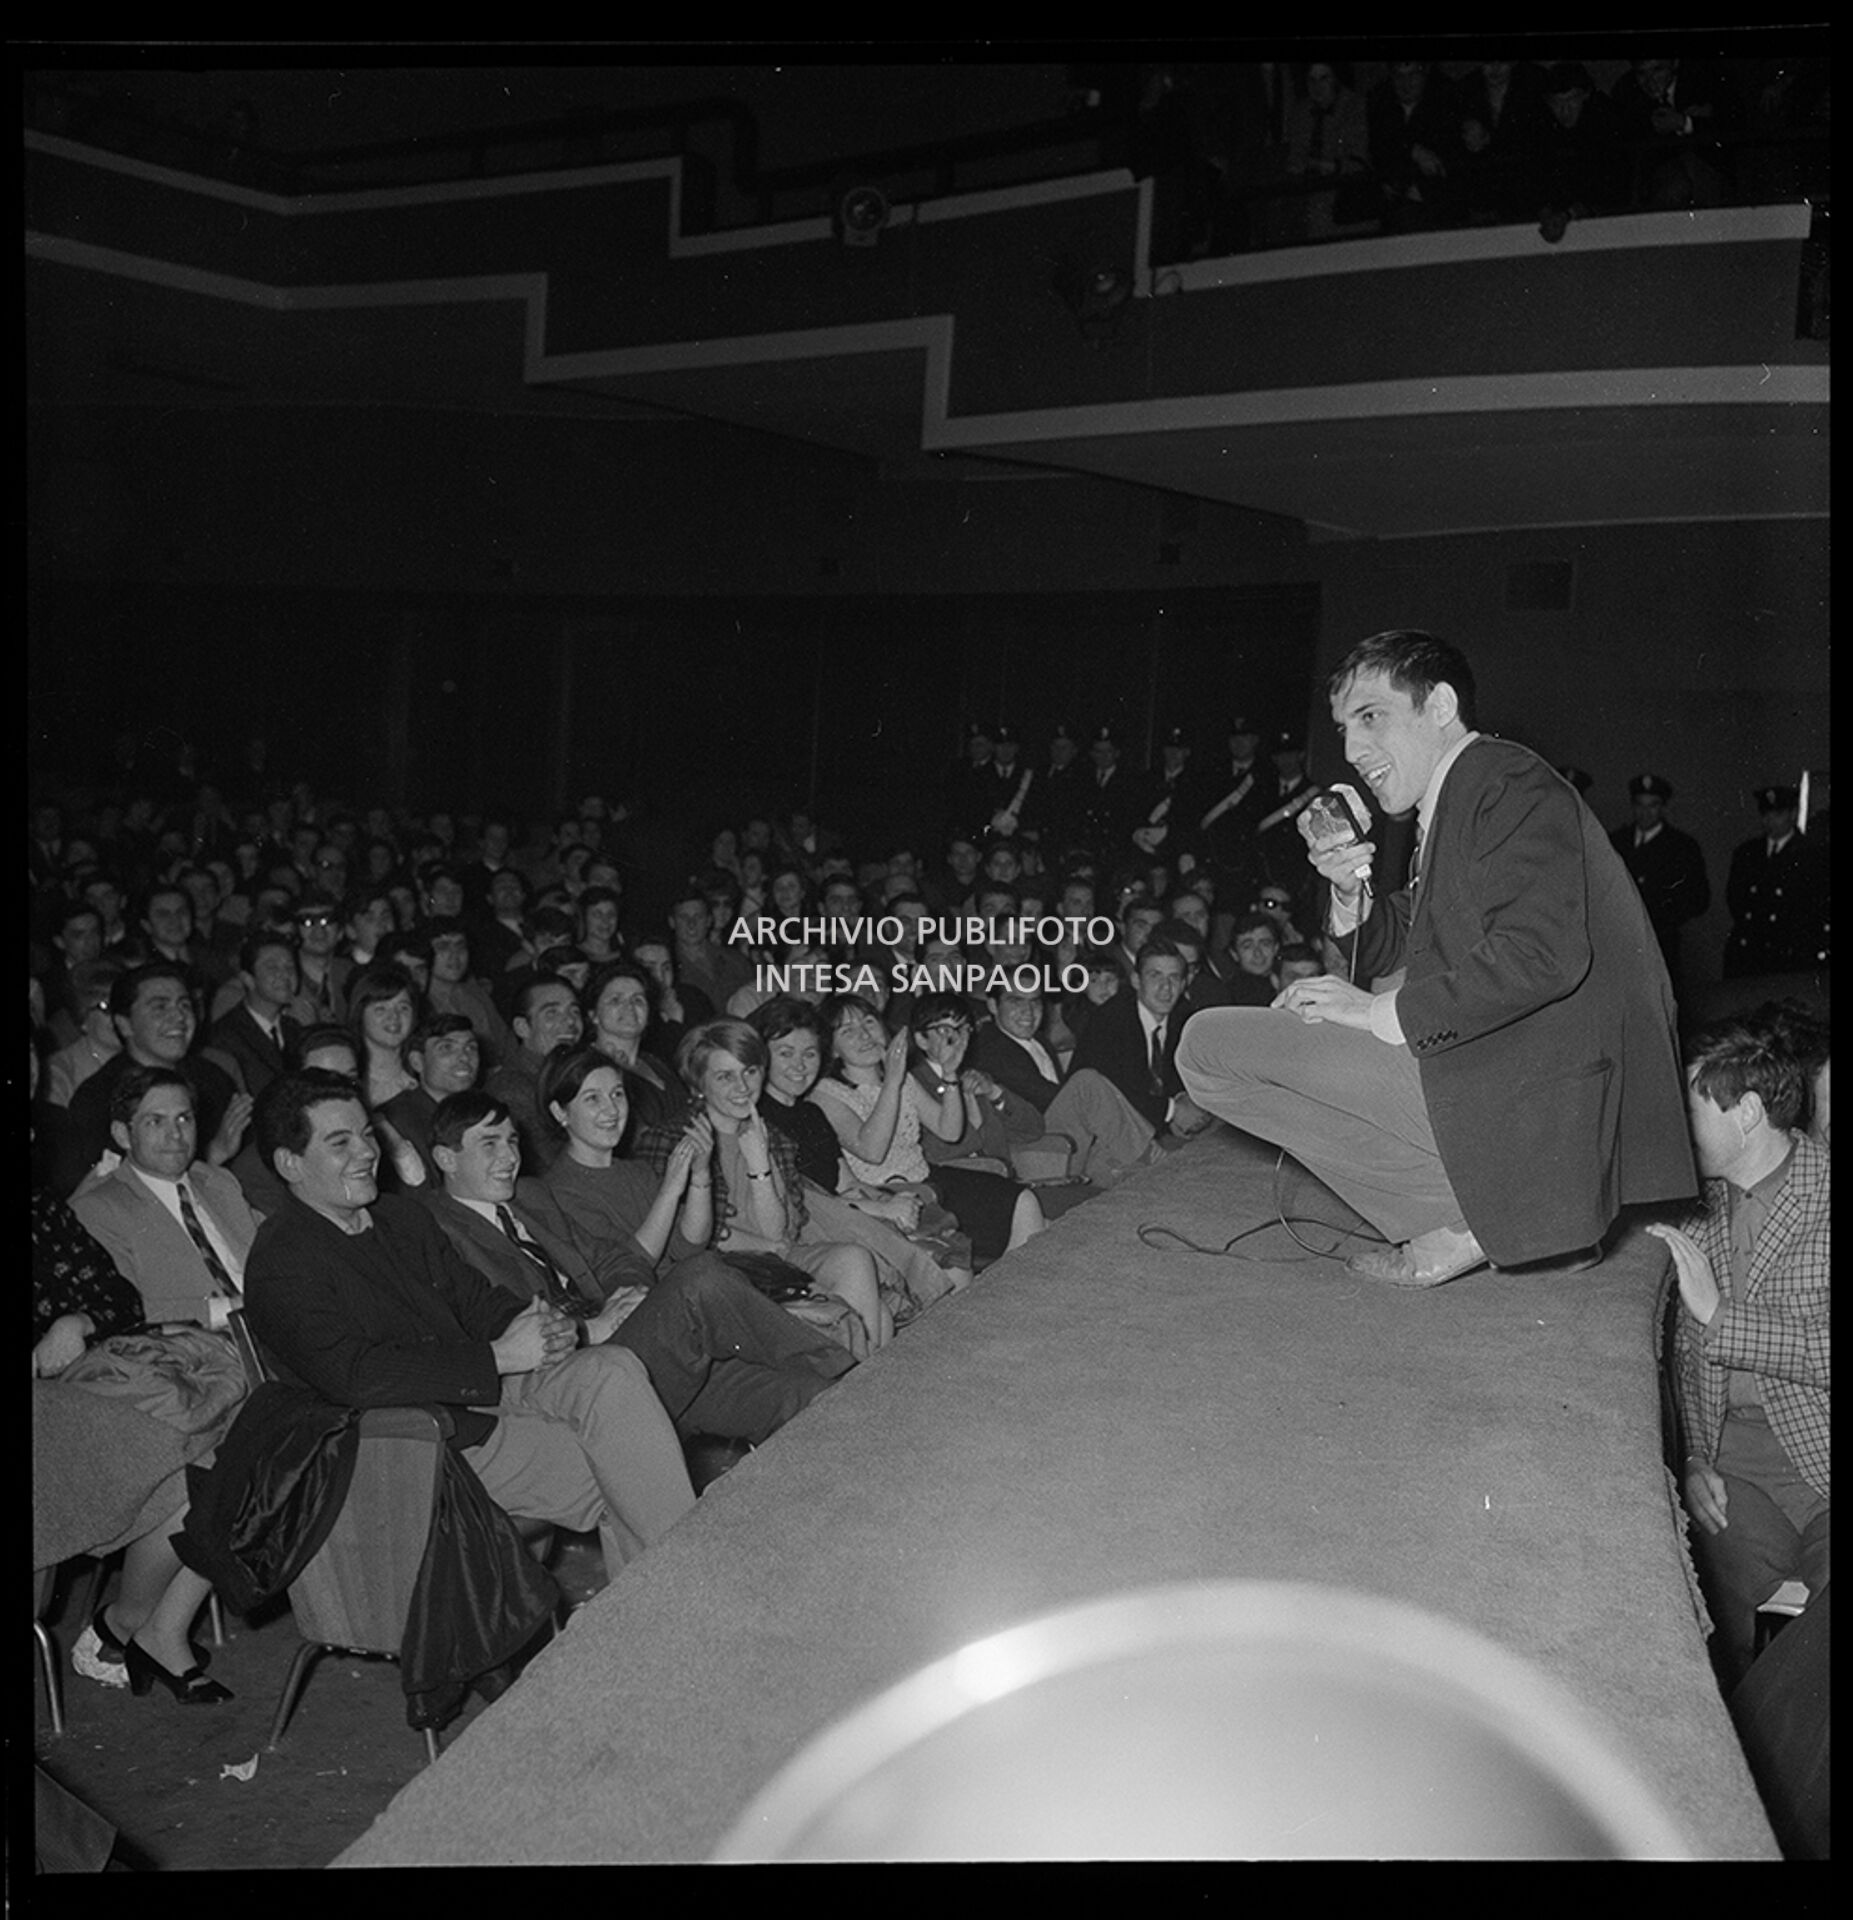 Adriano Celentano at the Teatro Smeraldo in Milan